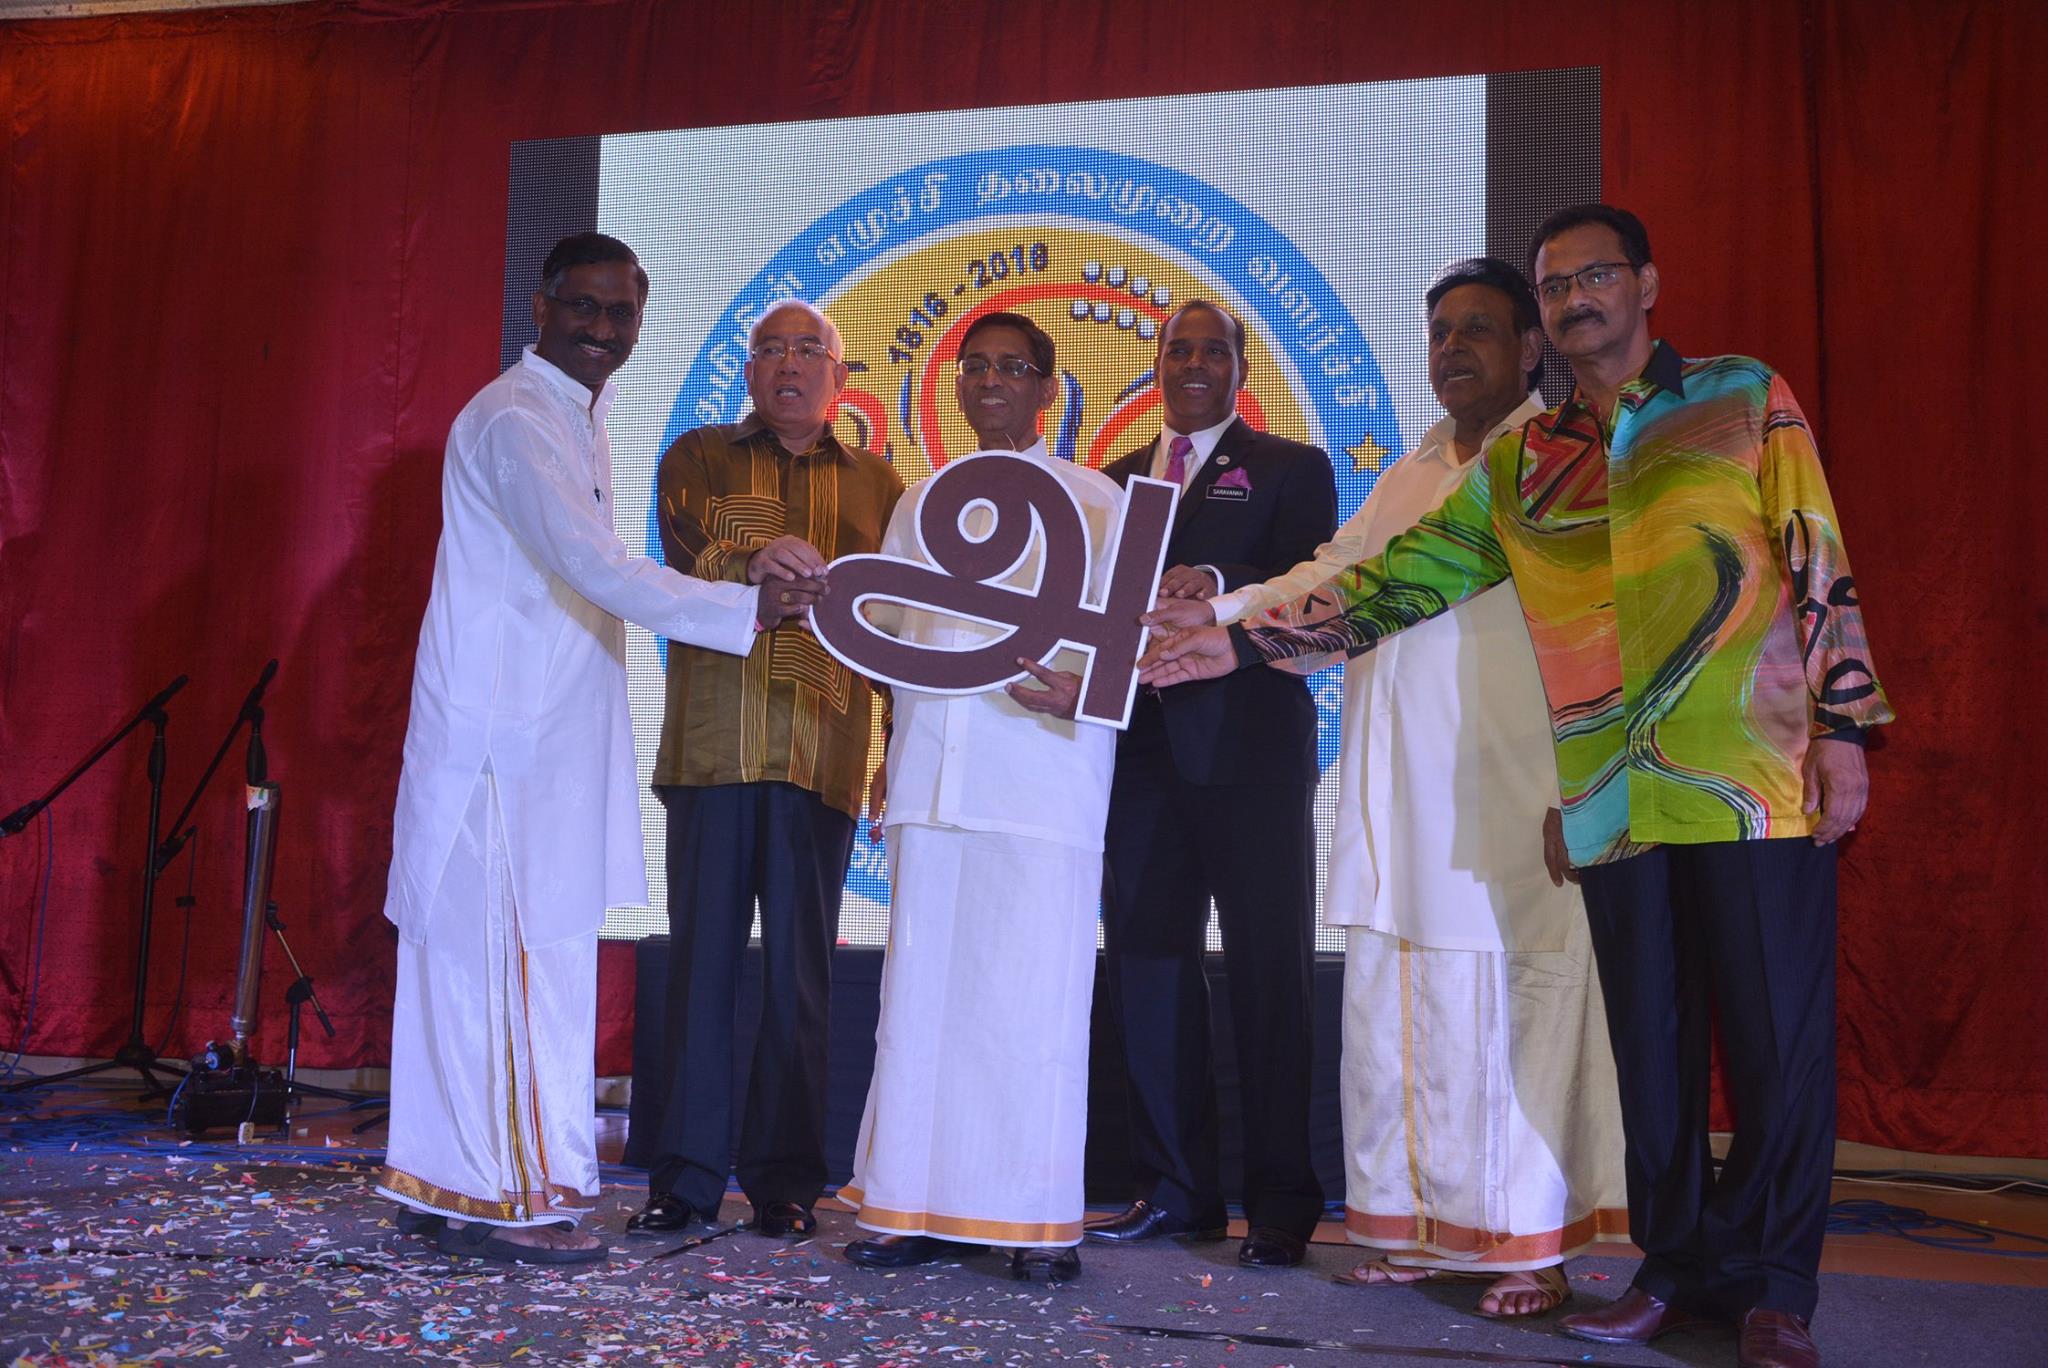 Celebrating 200 years of Tamil Education in Kuala Lumpur